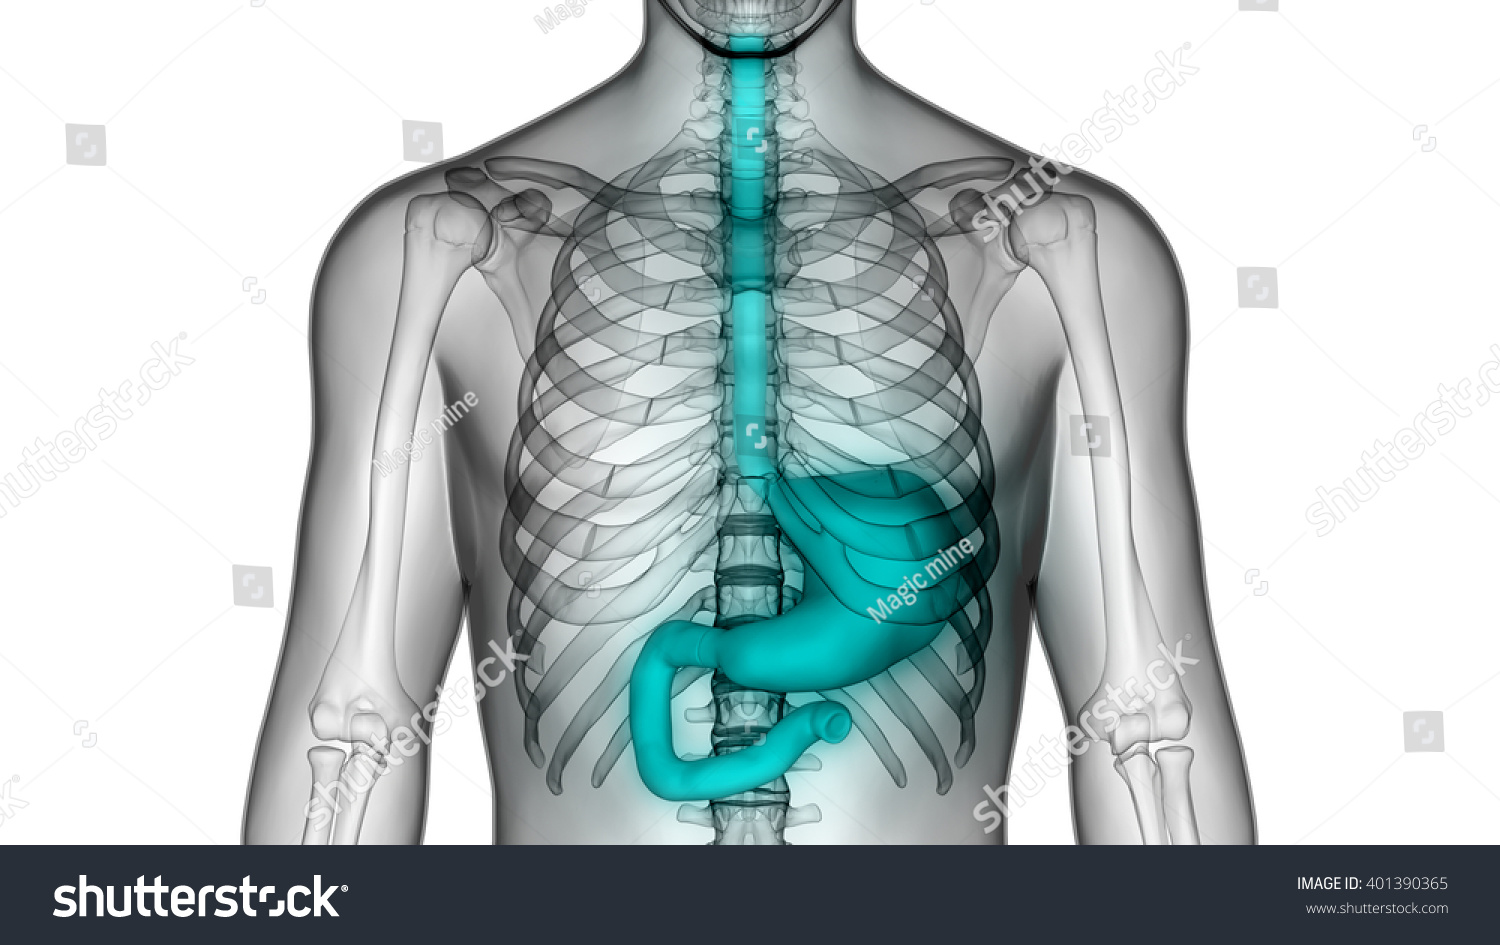 3d Illustration Of Human Body Organs (Stomach Anatomy) - 401390365